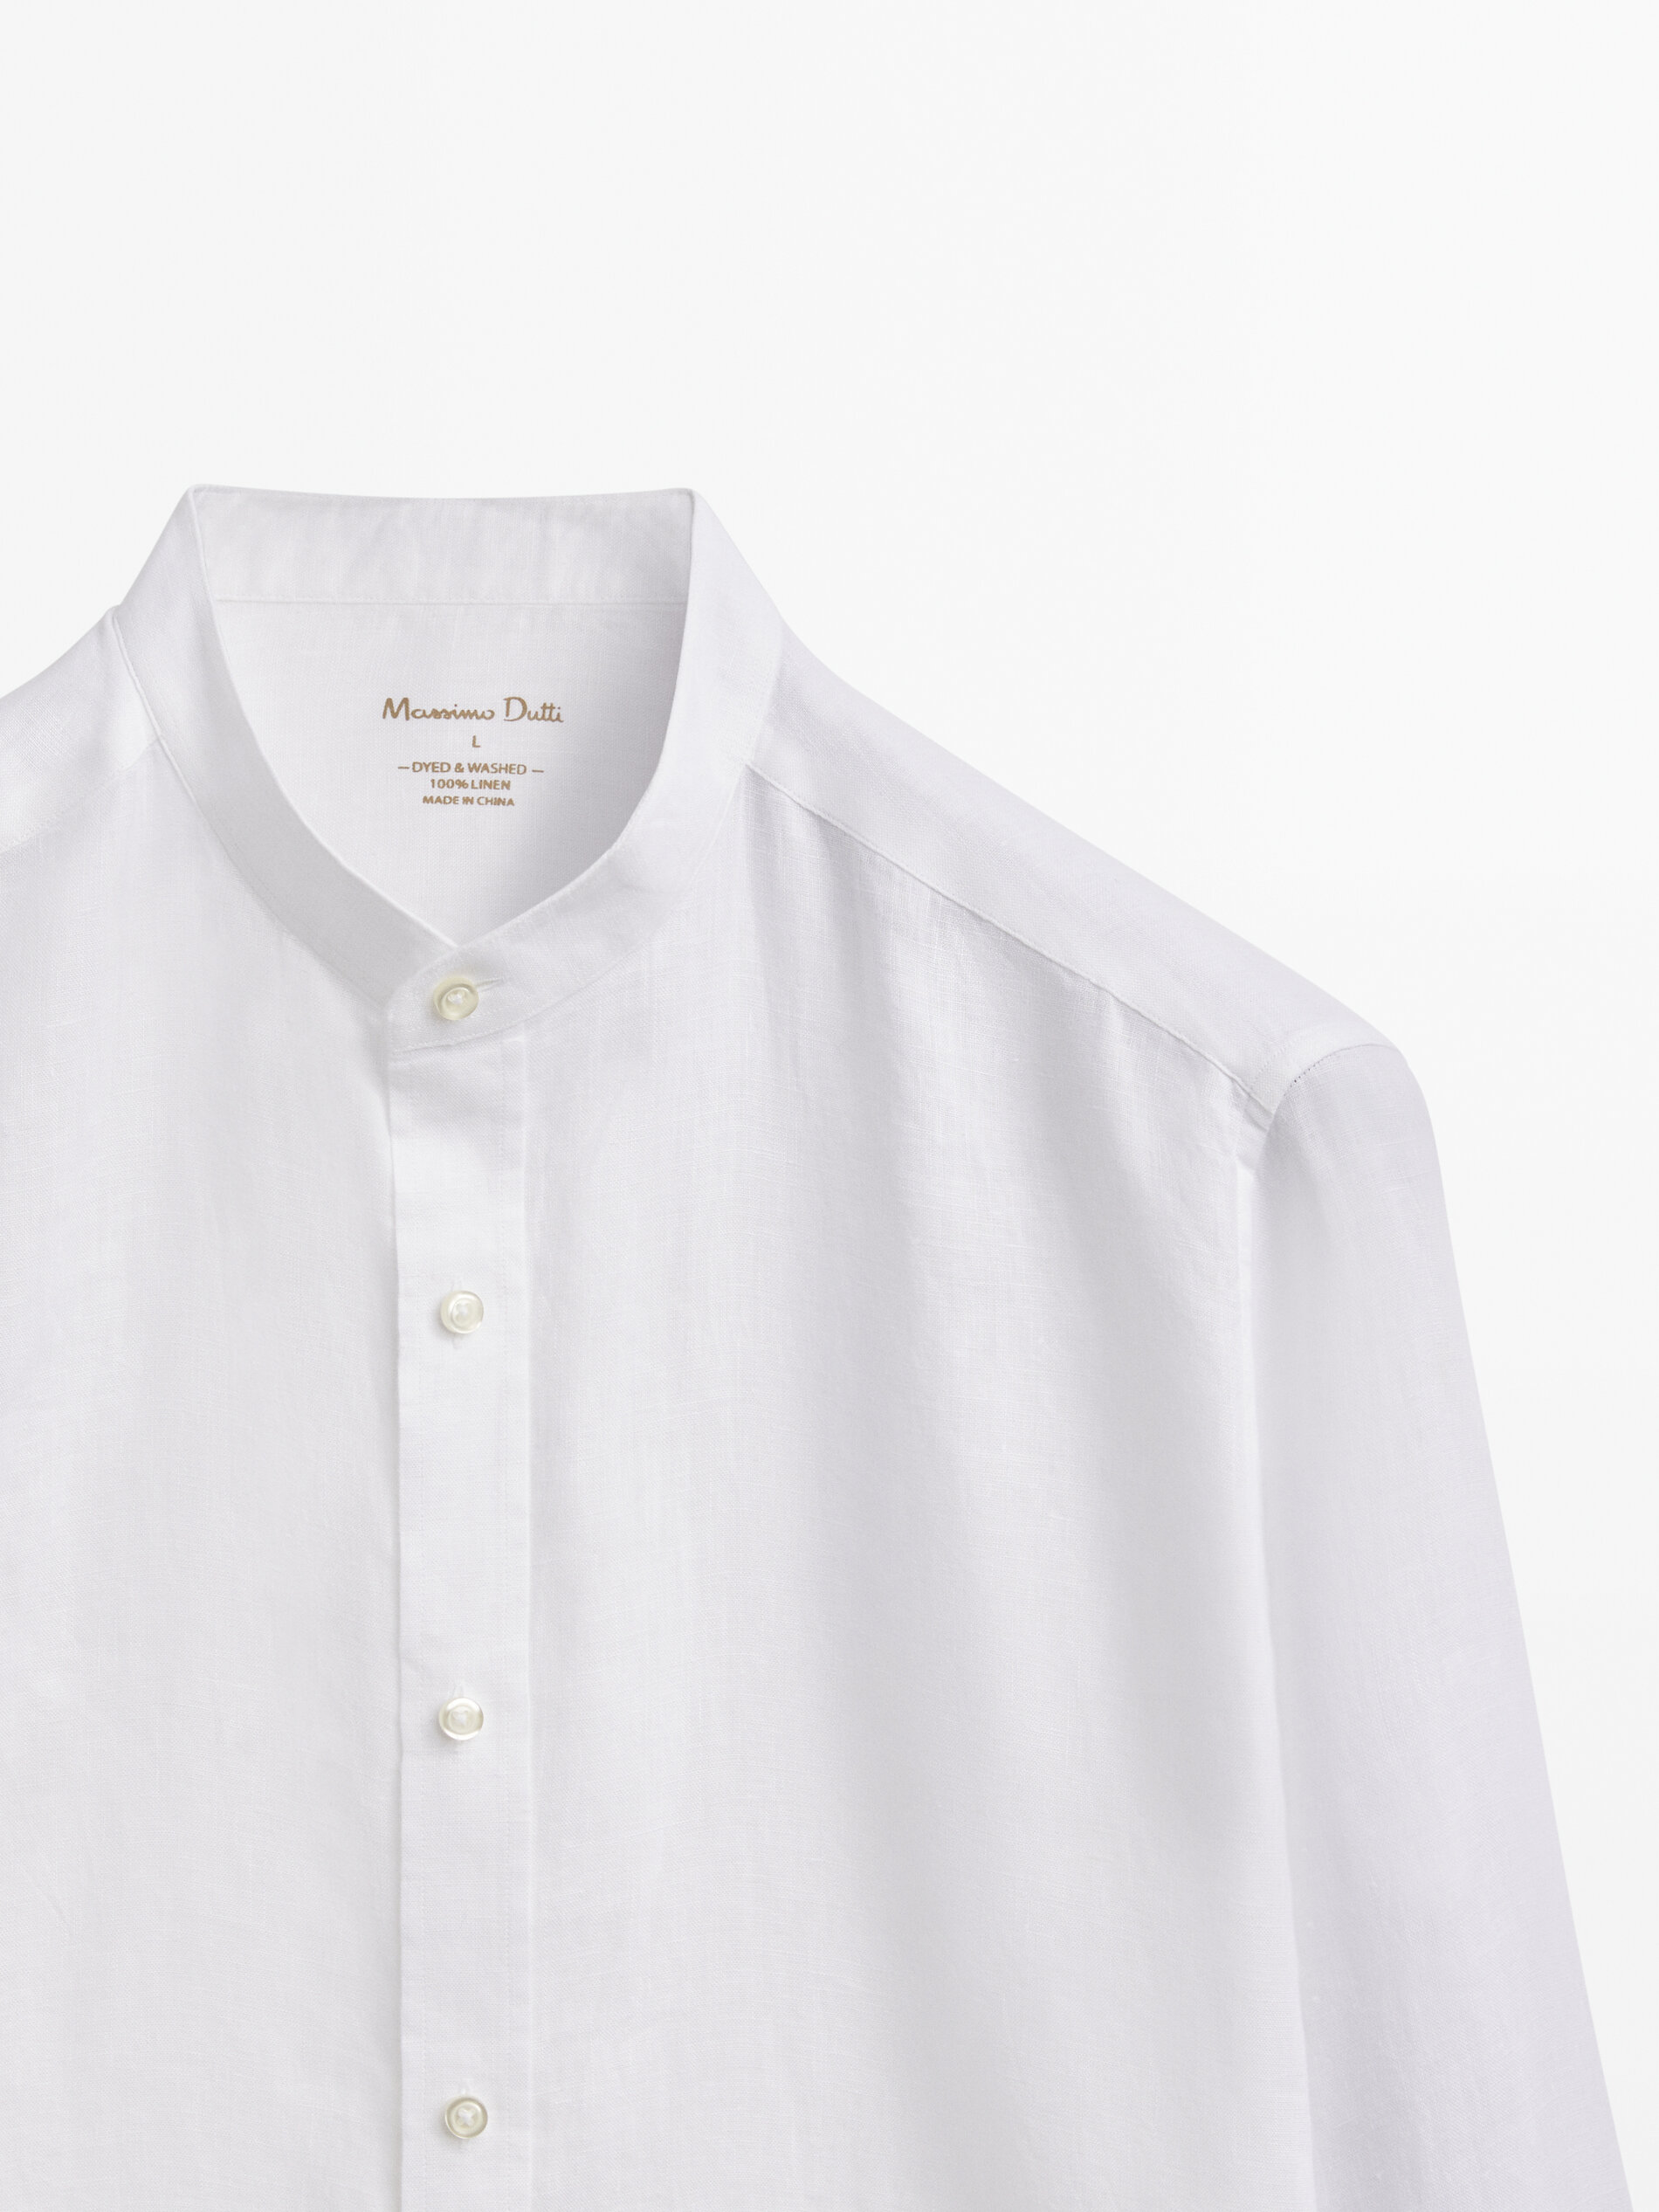 Washed White Linen Shirt